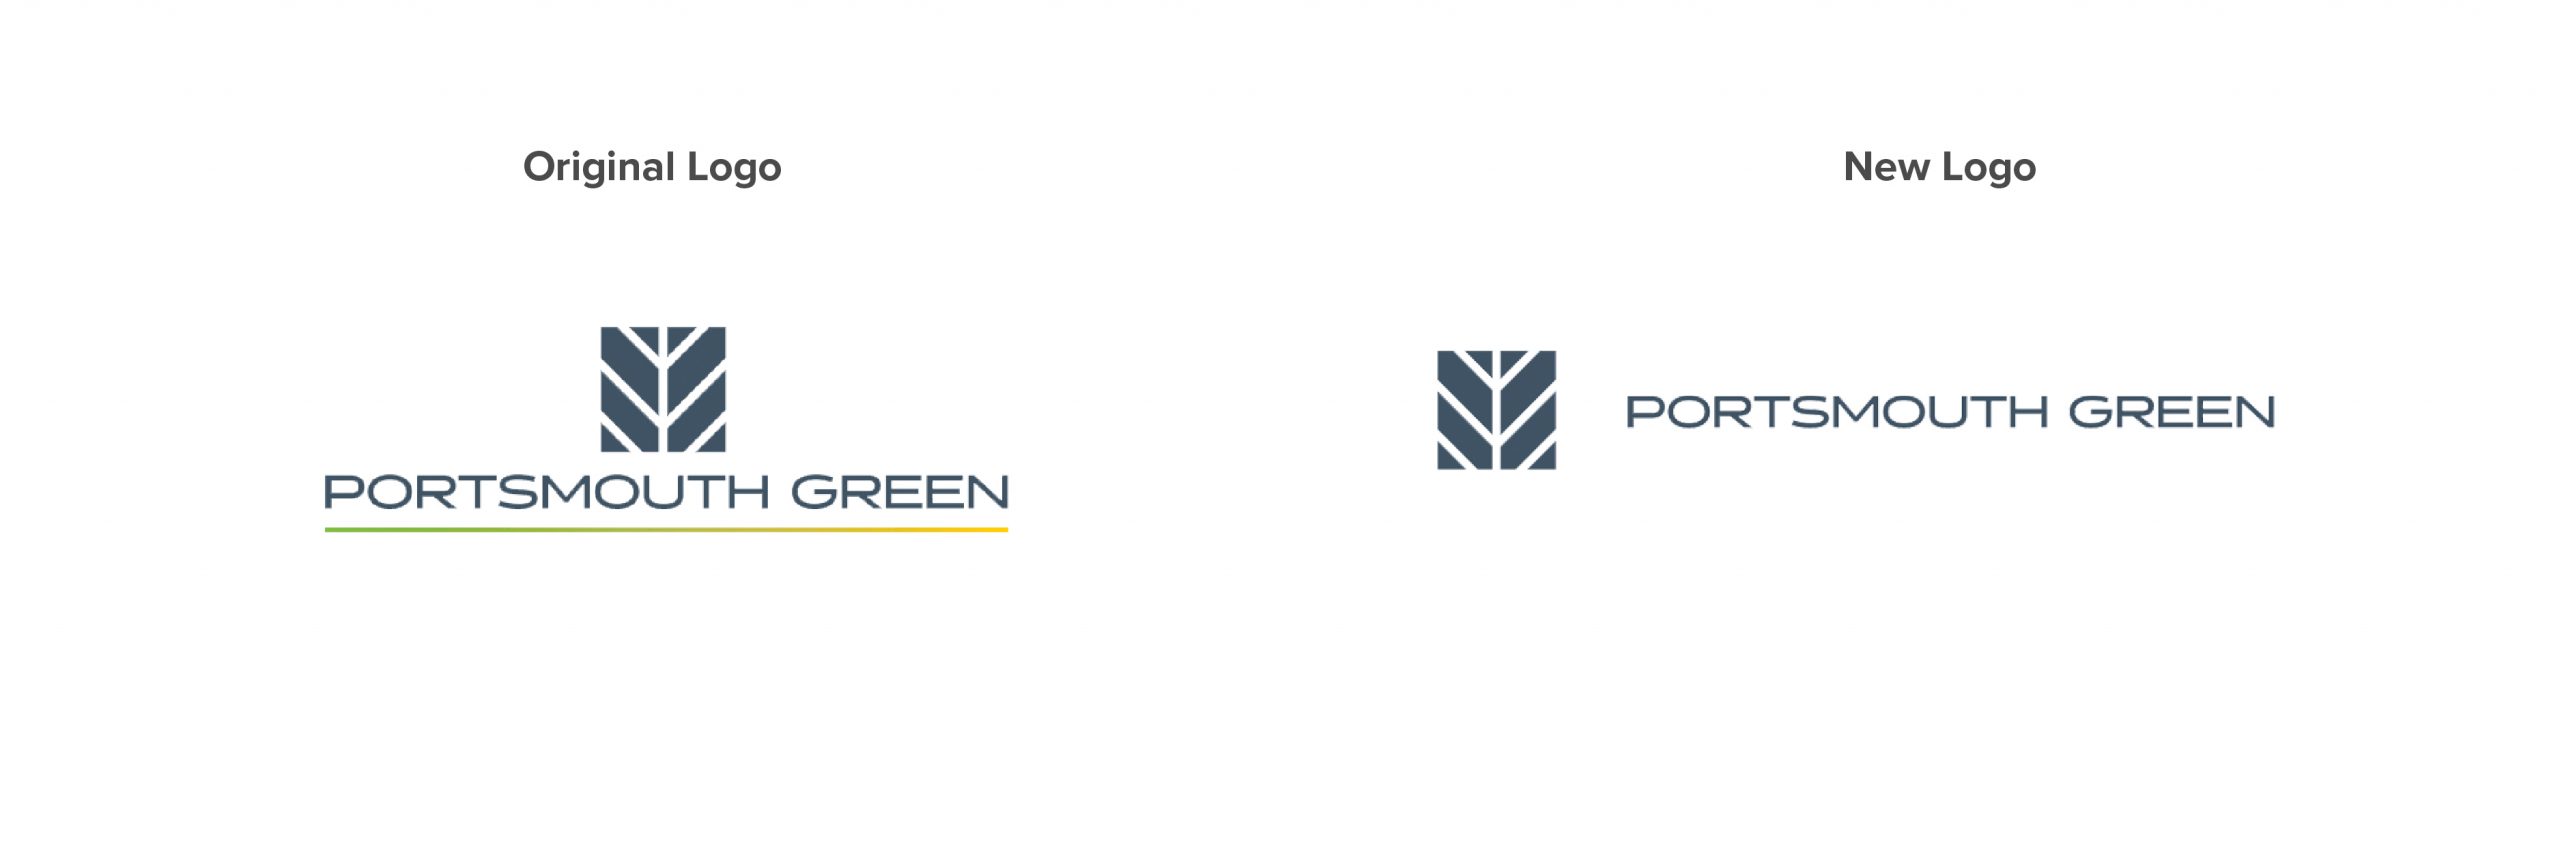 Portsmouth Green logos